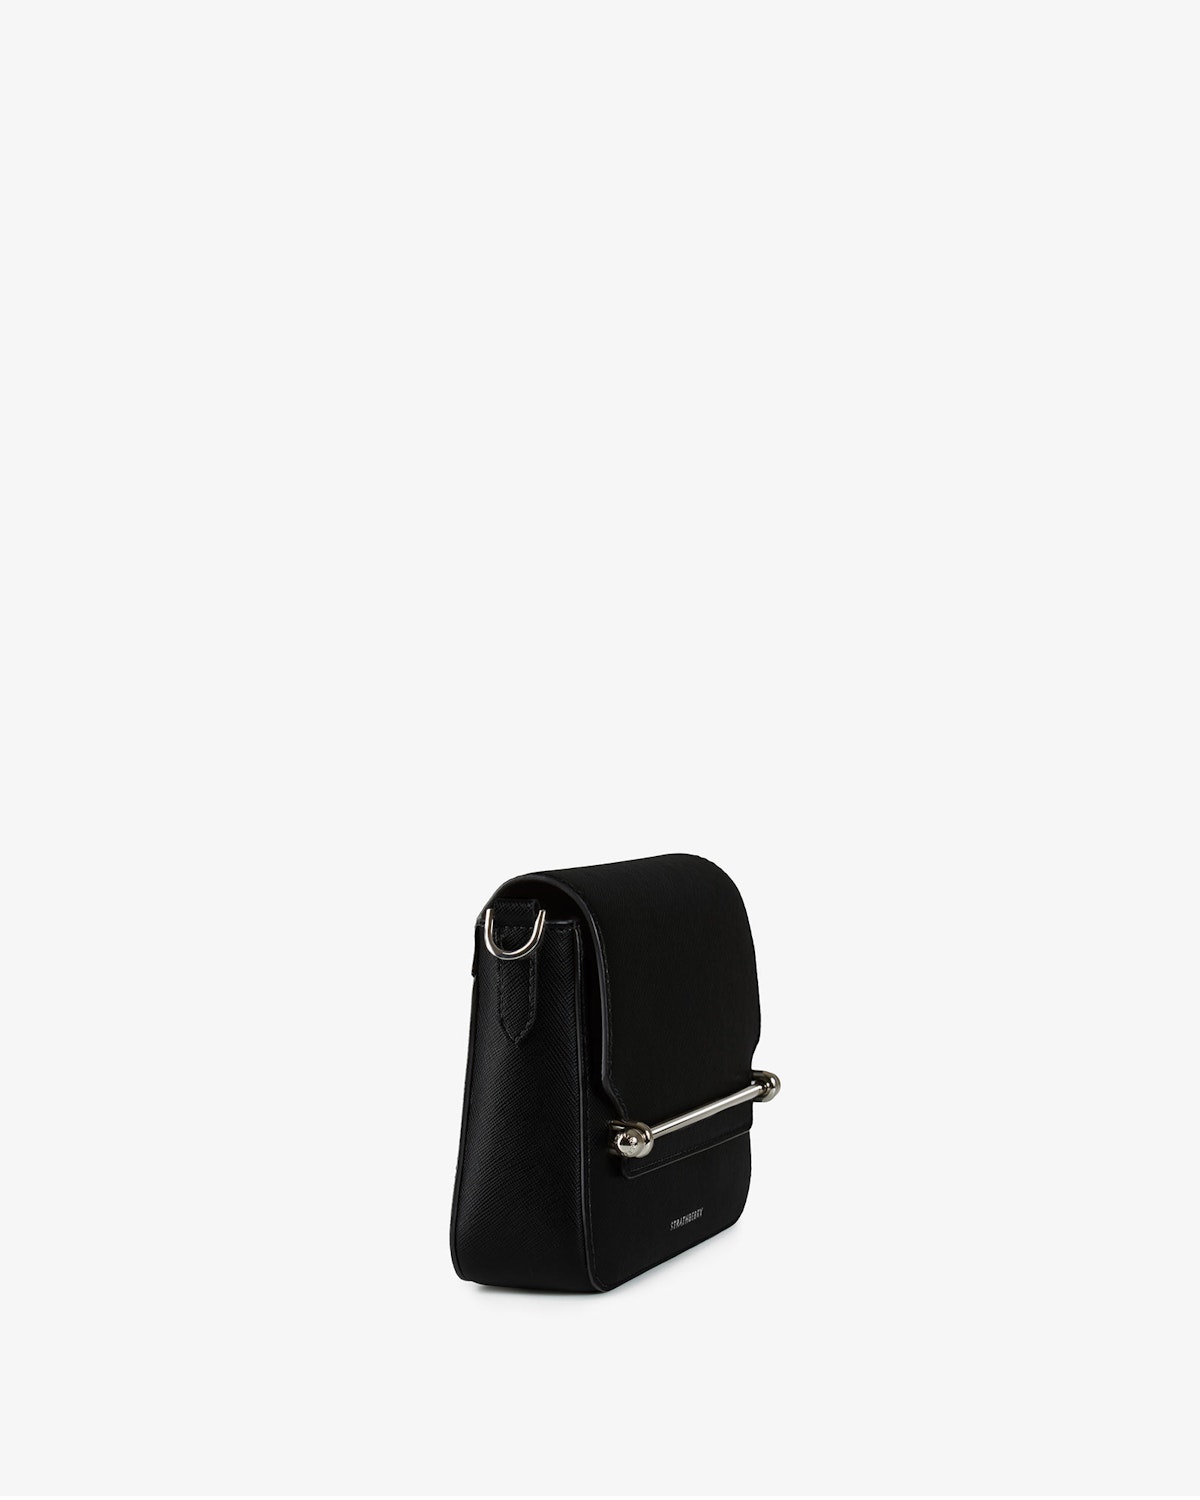 Strathberry - Ace Mini - Crossbody Leather Mini Handbag - Black ...